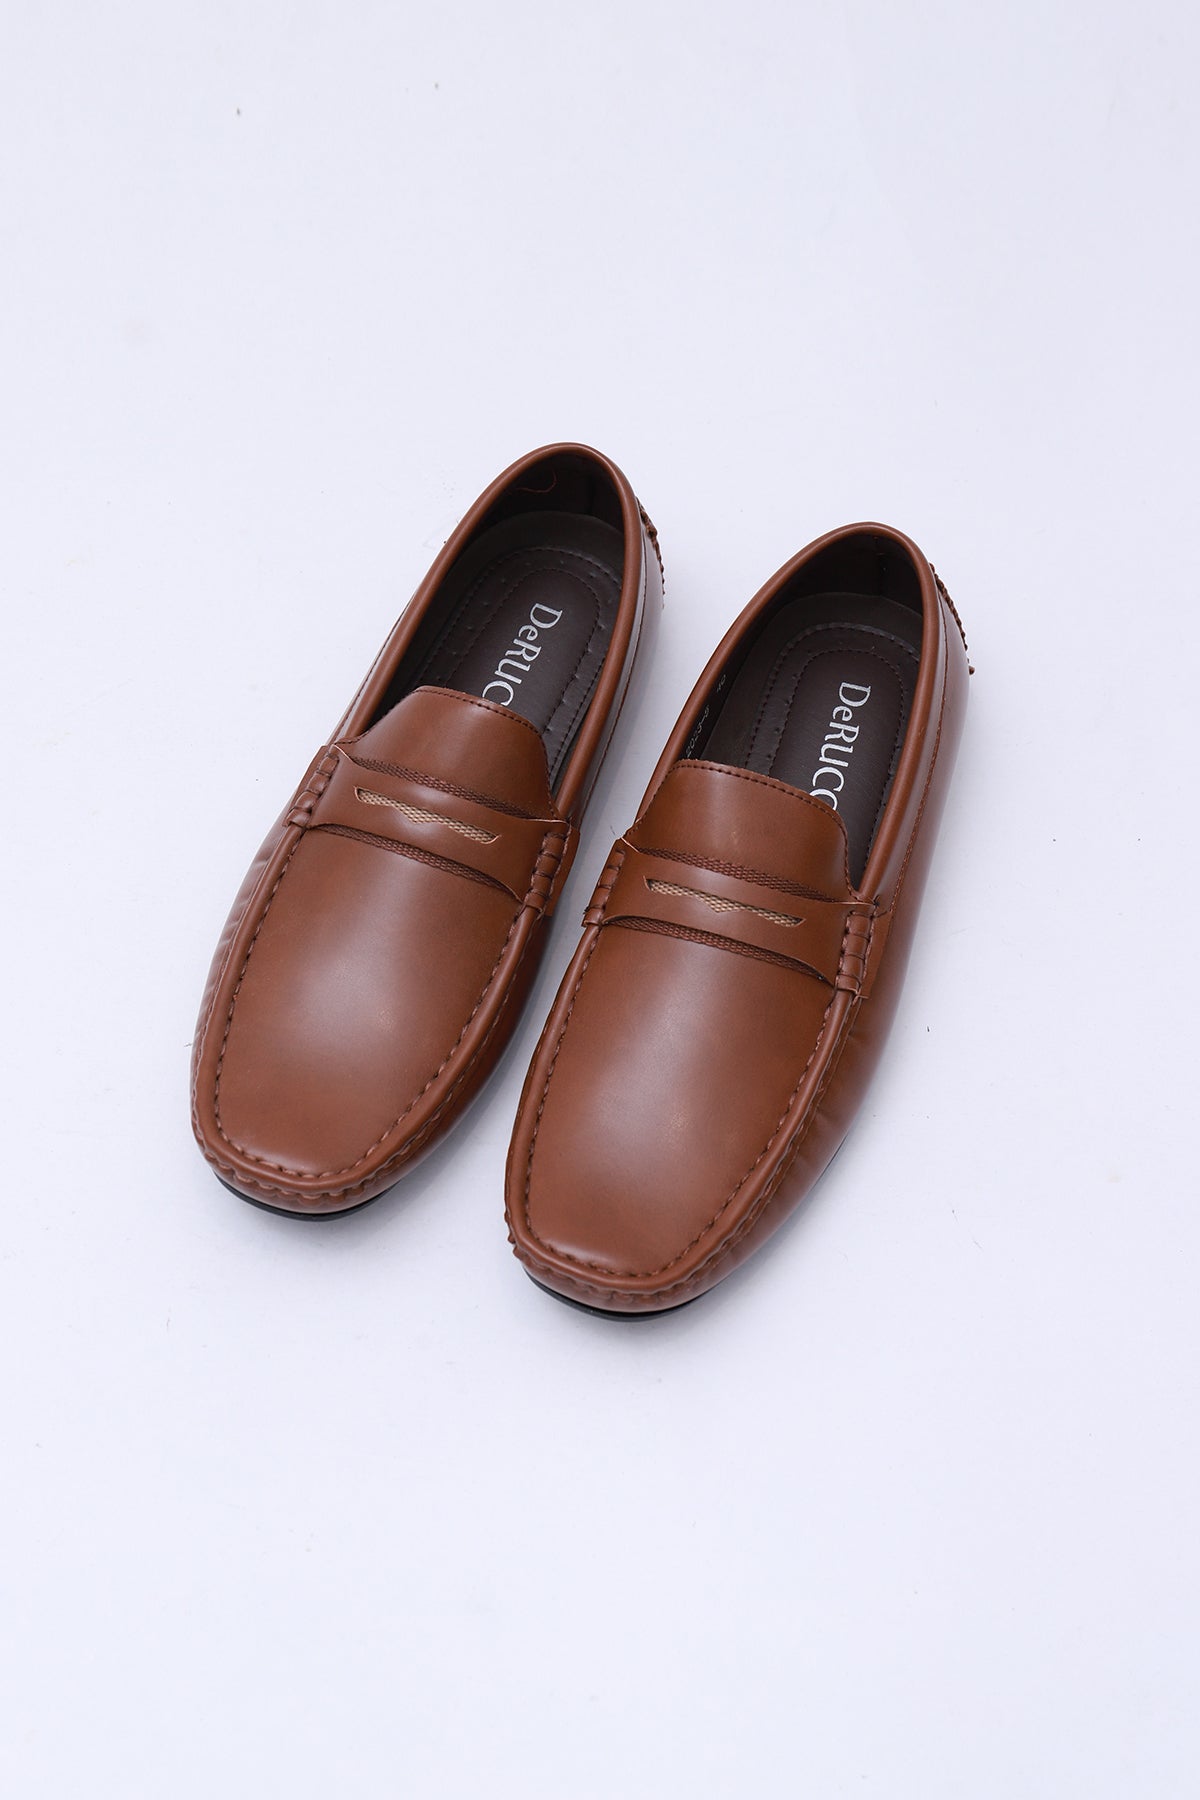 Derucci Men's Casual Shoe